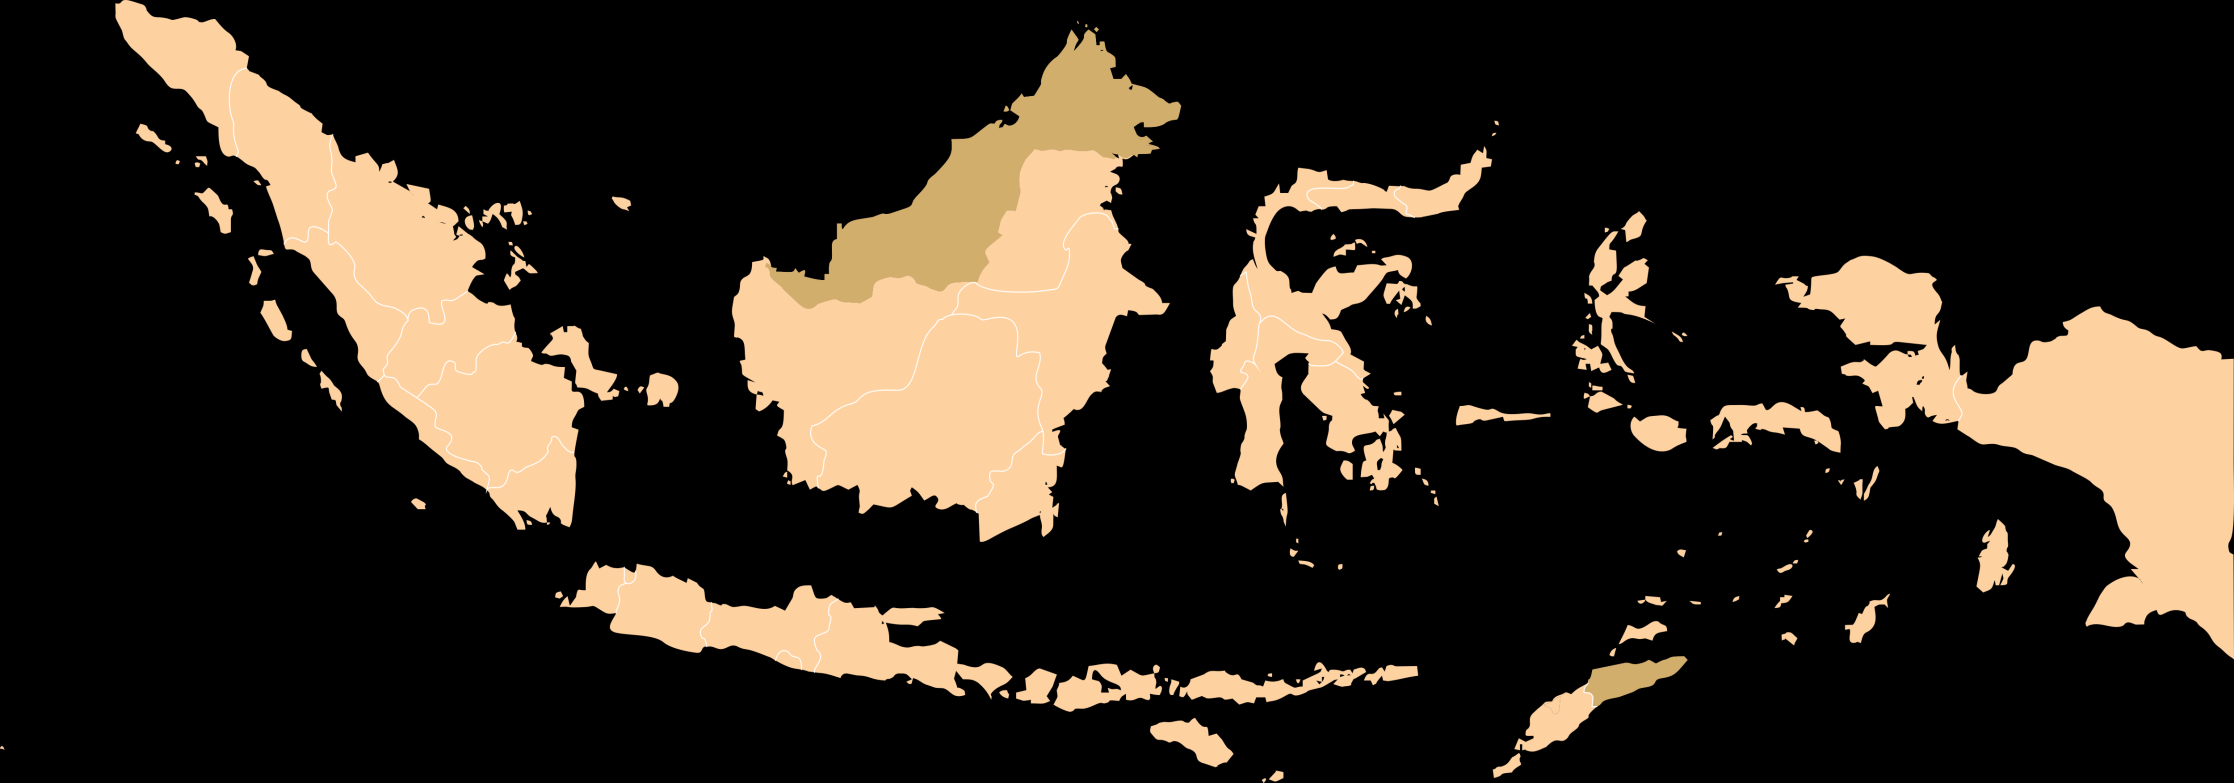 TARGET REALISASI INVESTASI PMA DAN PMDN BERDASARKAN PROVINSI Aceh 1,54% 9,61 Sumatera Utara 1,41% Riau 9,00 1,41% 9,00 Kep.